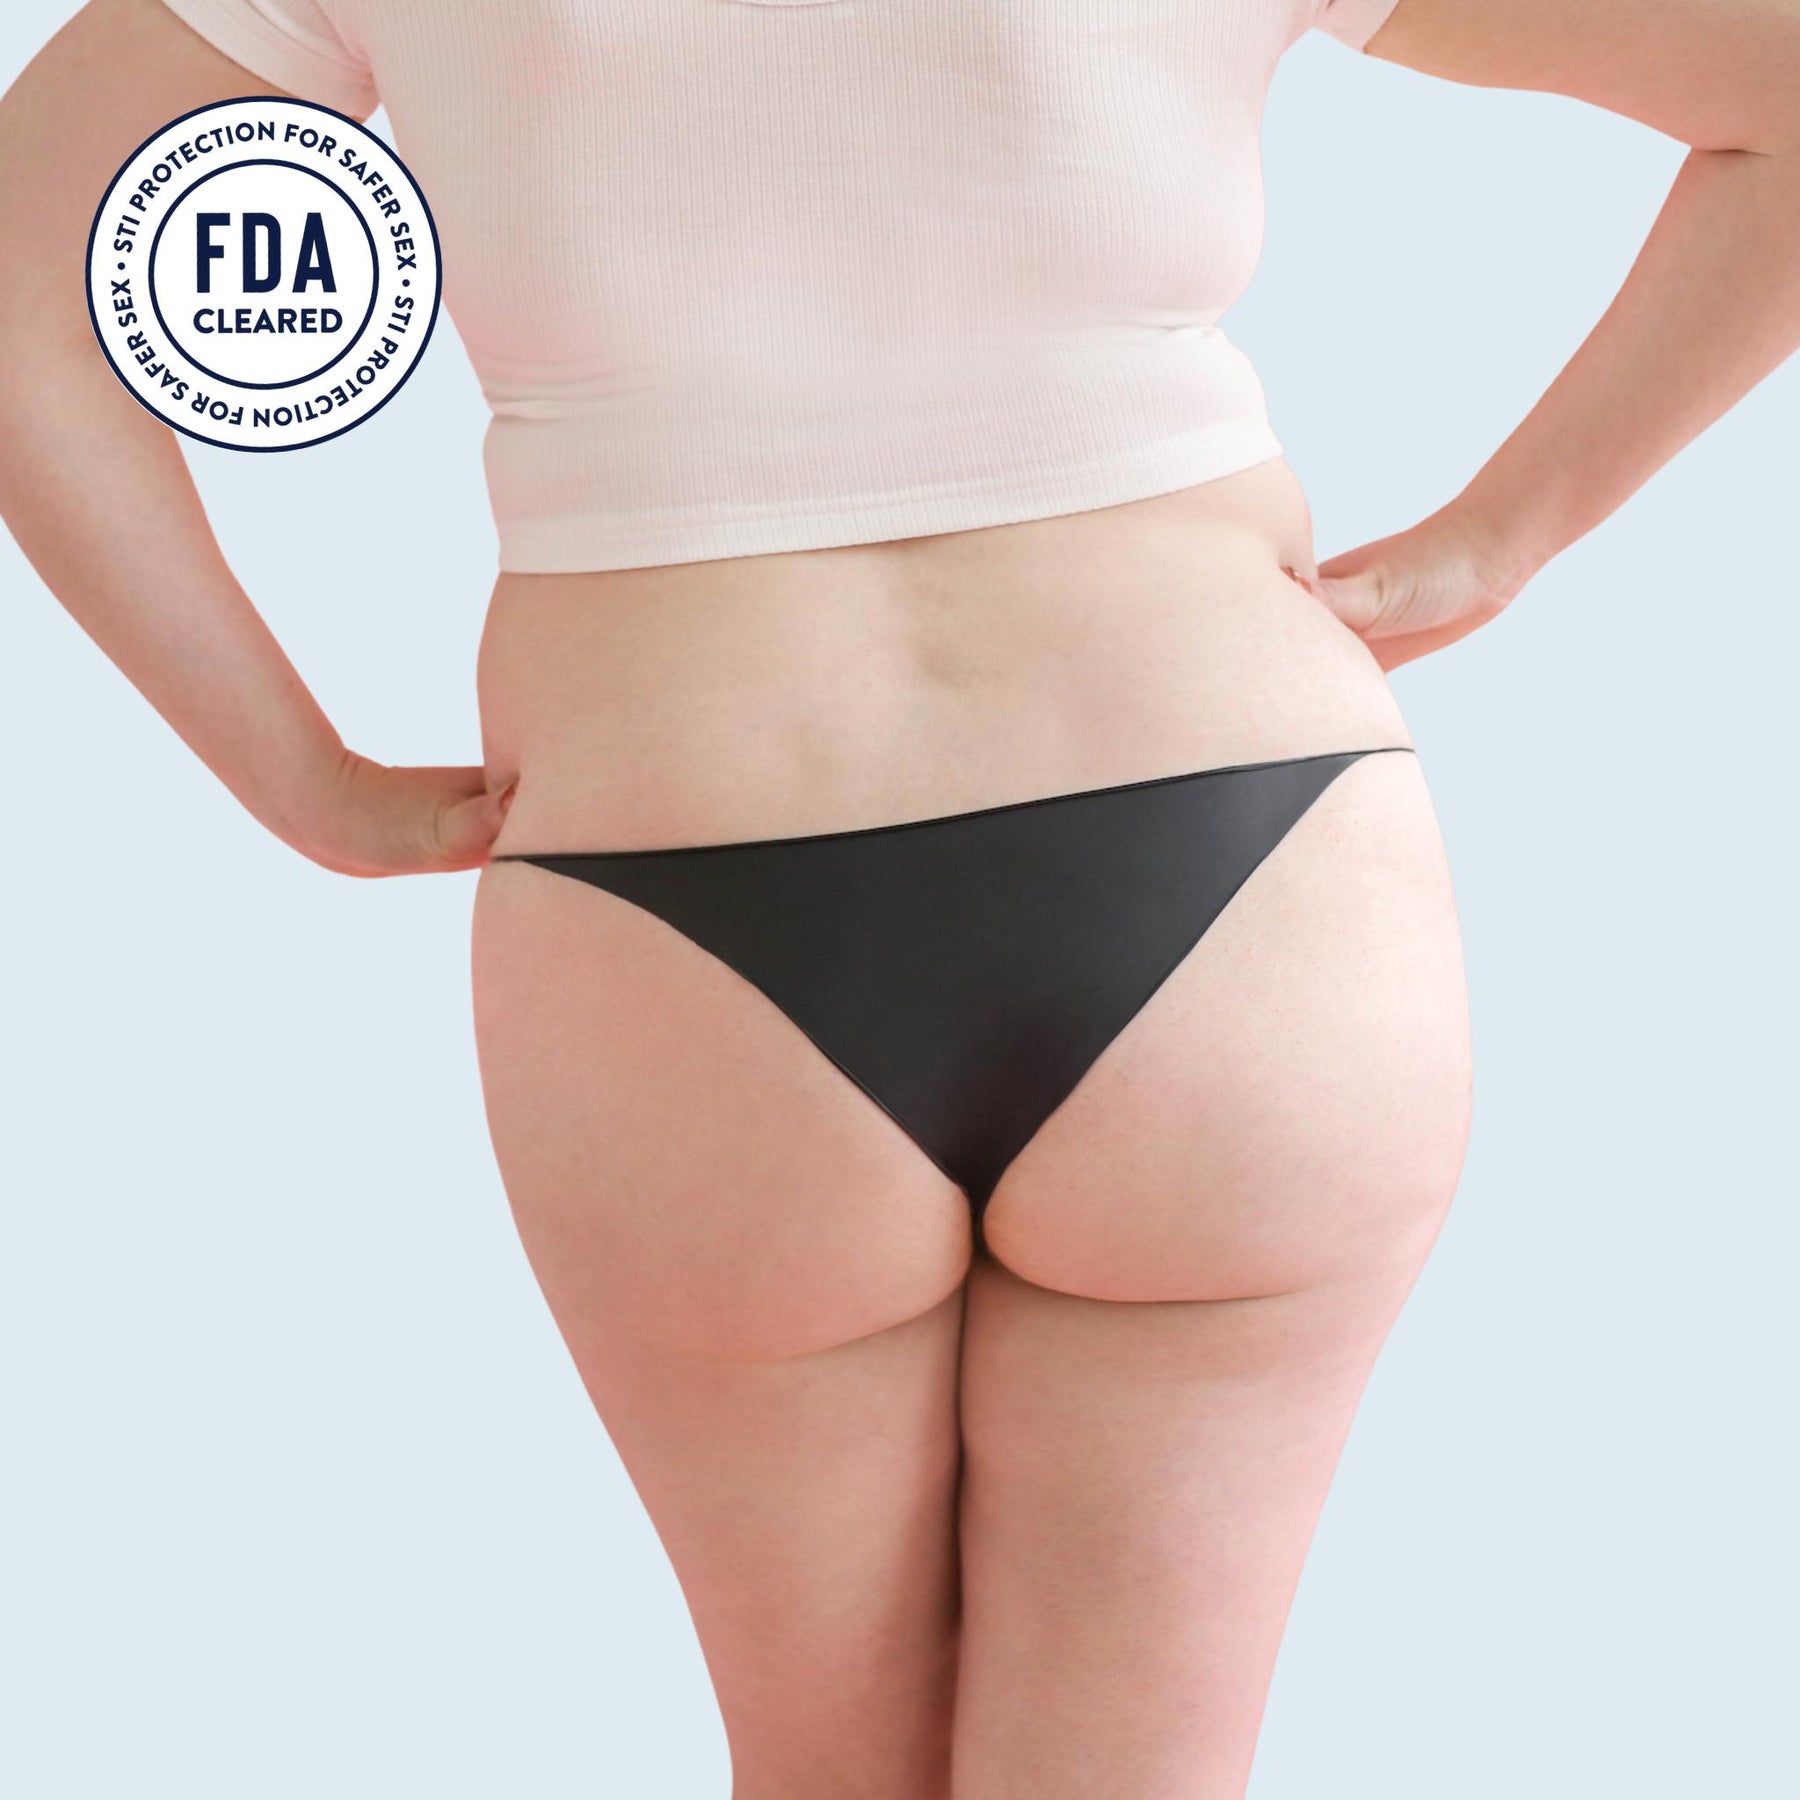 Lorals model Amanda demonstrates the back view of Black Latex STI Protection Panties in Bikini Style